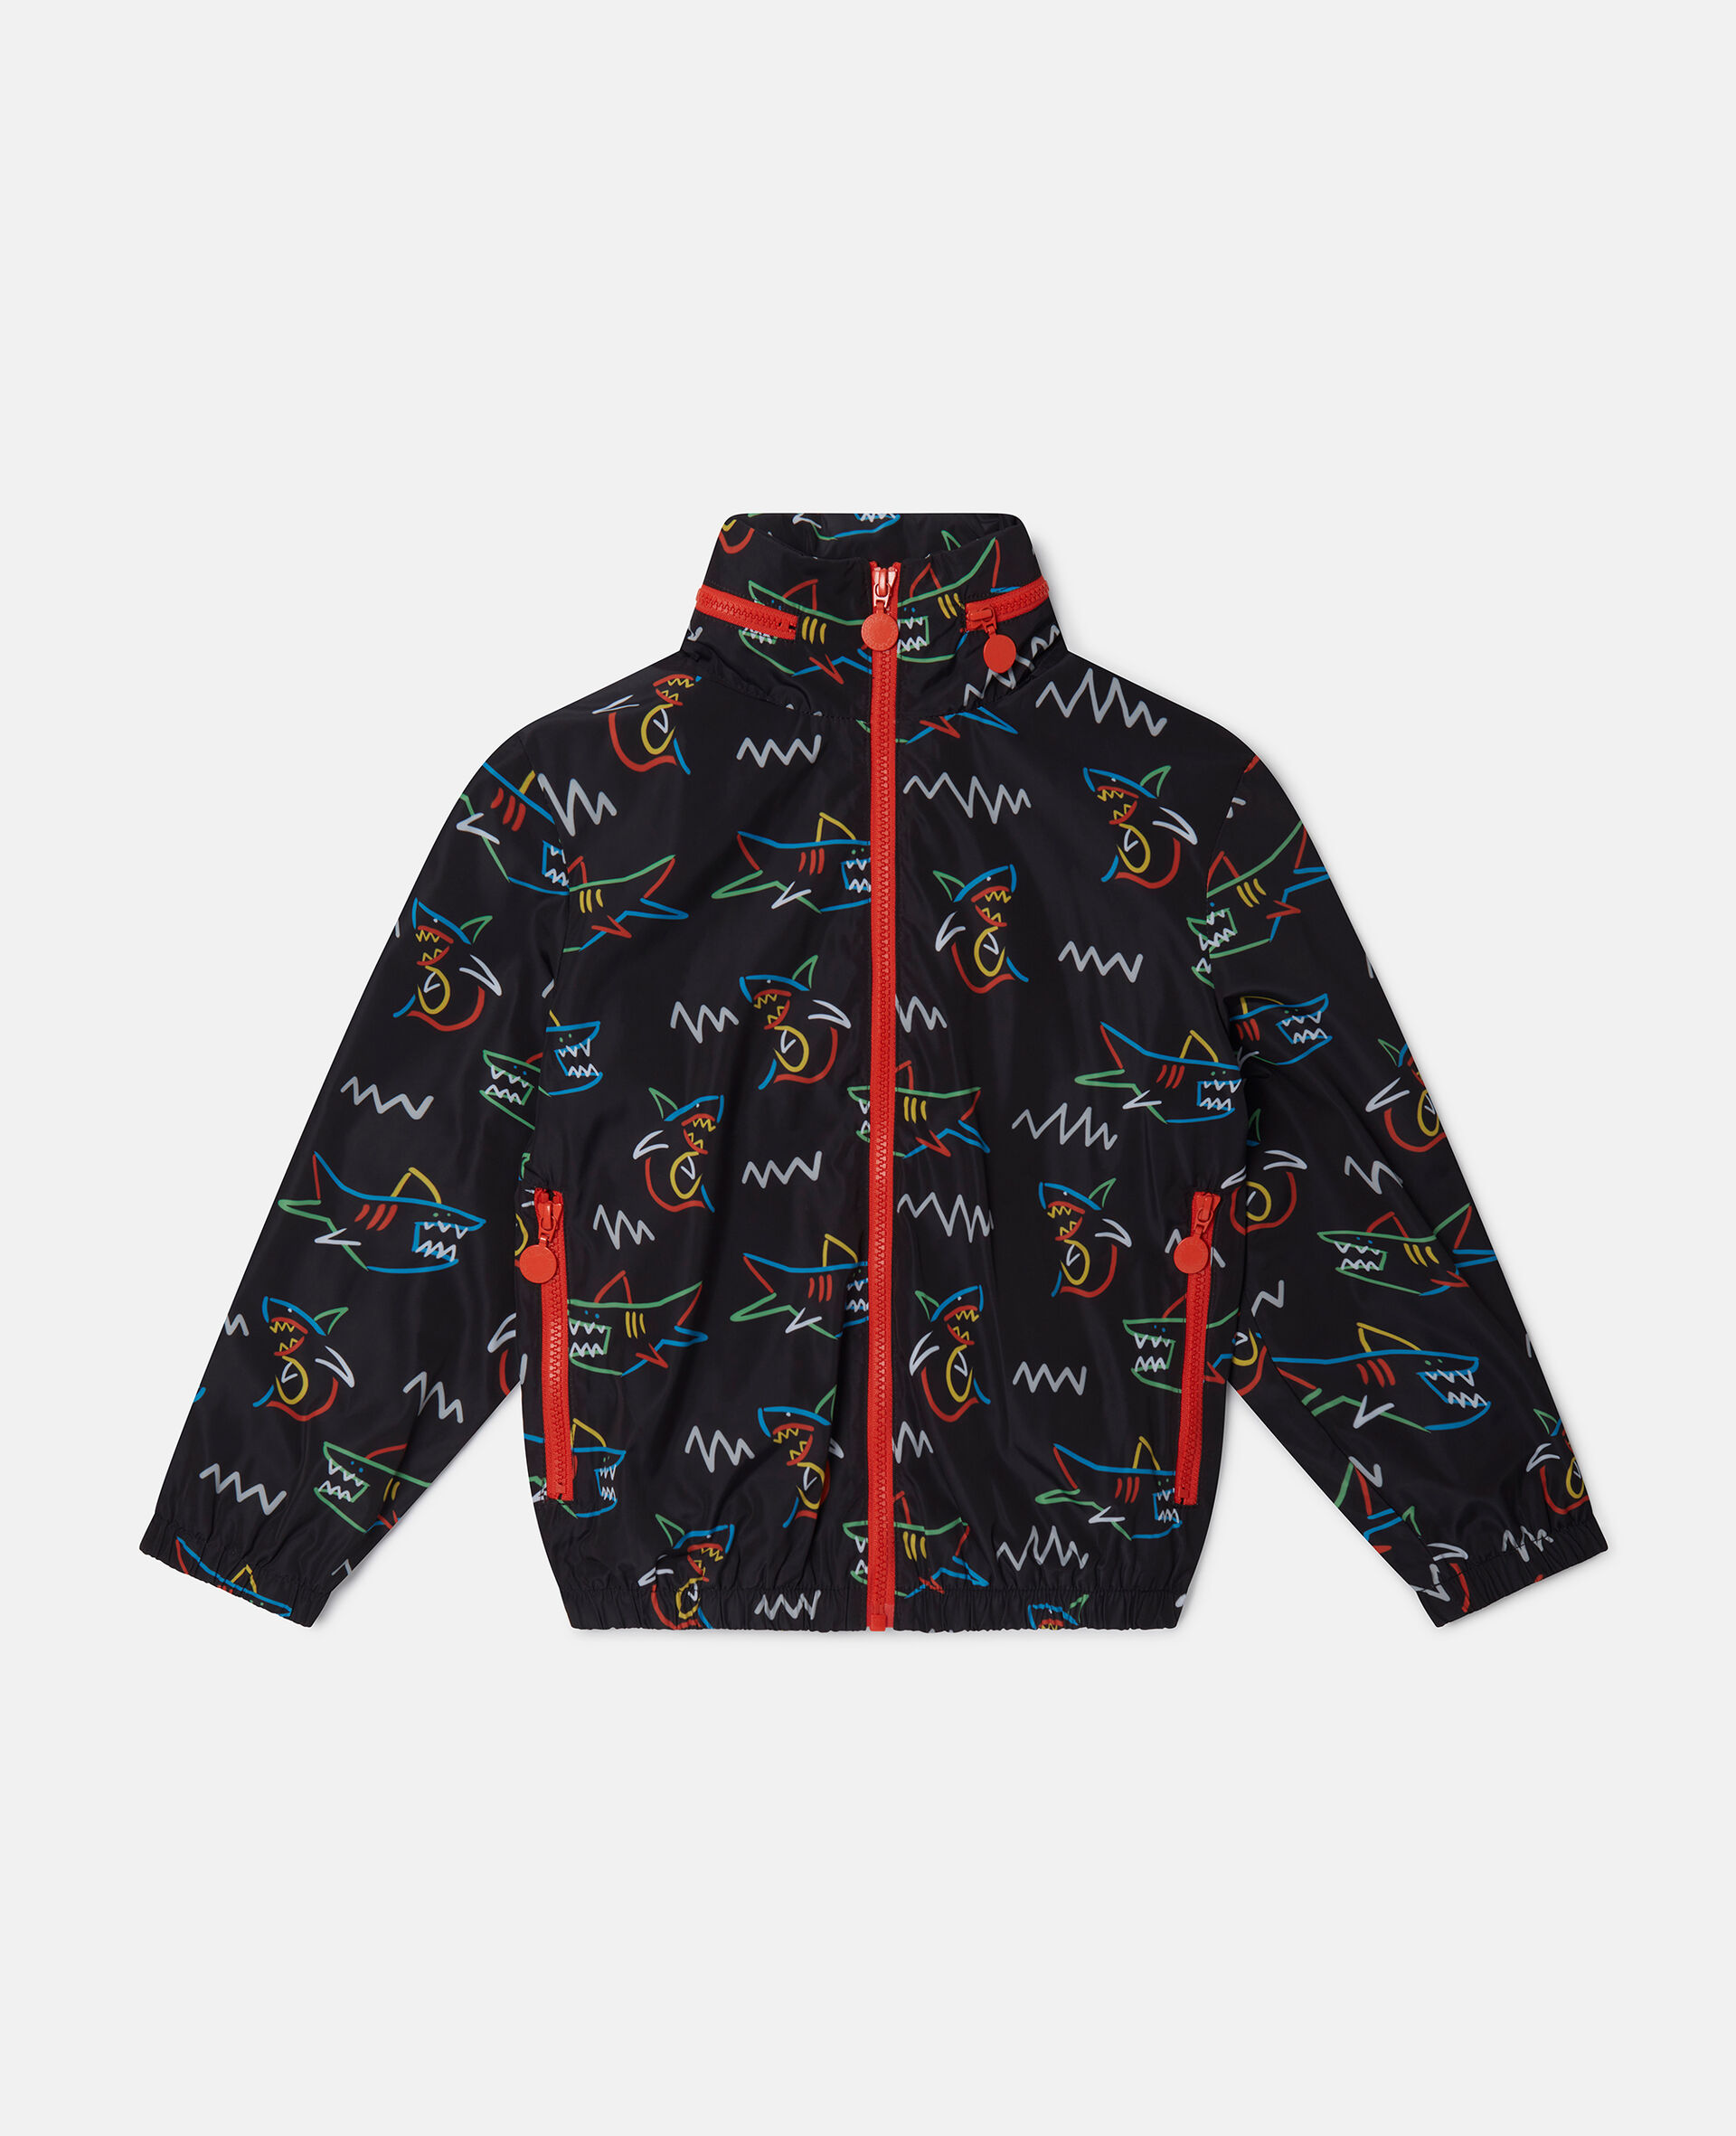 Chalkboard Shark Print Hooded Jacket-Black-medium